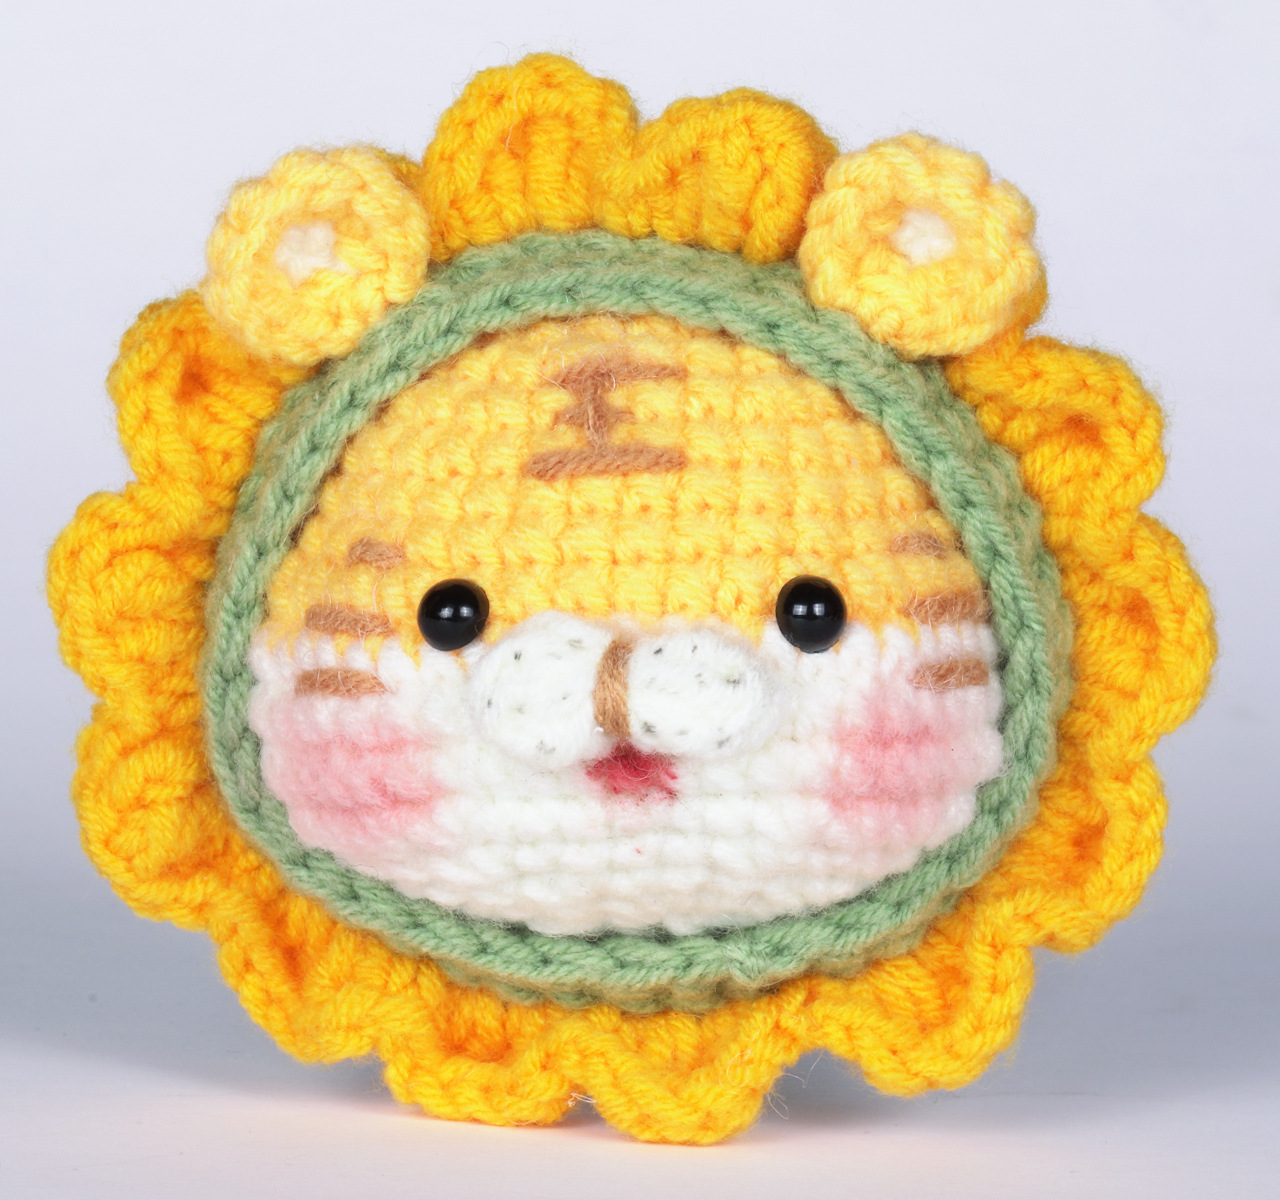 Beginner Crochet Kit – A Toy Garden